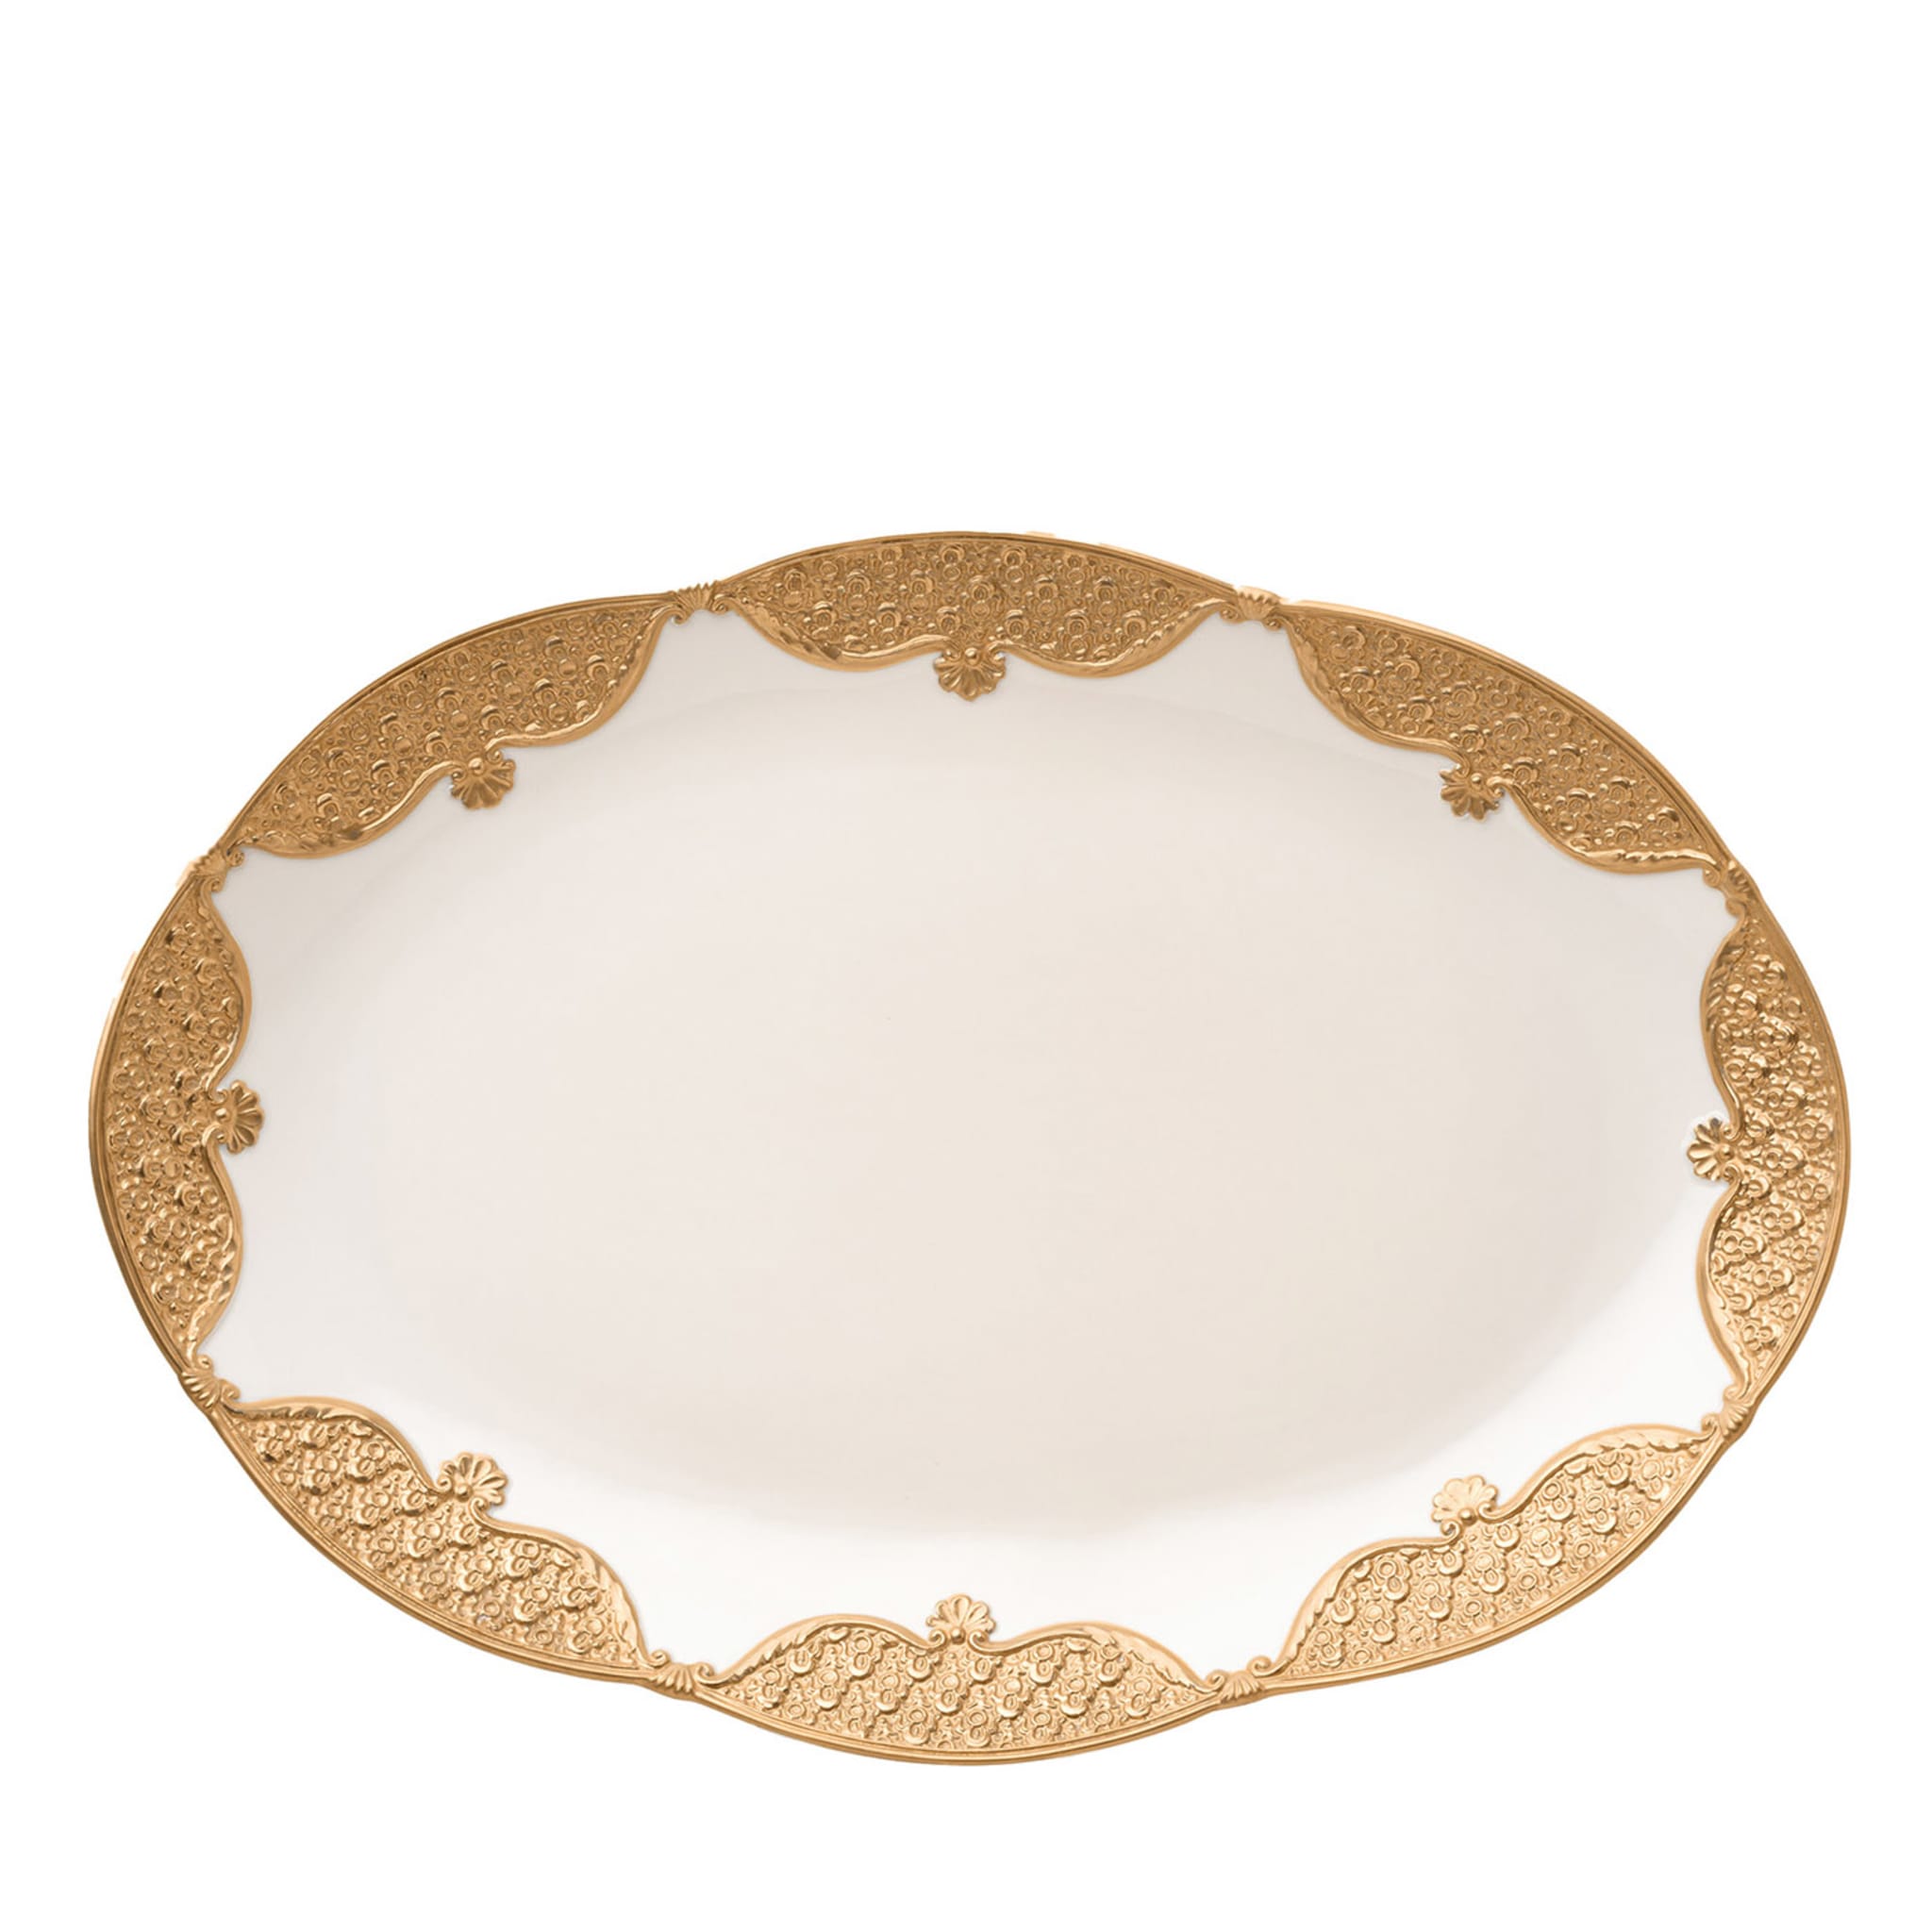 Caterina Grand plat de service ovale blanc et or - Vue principale